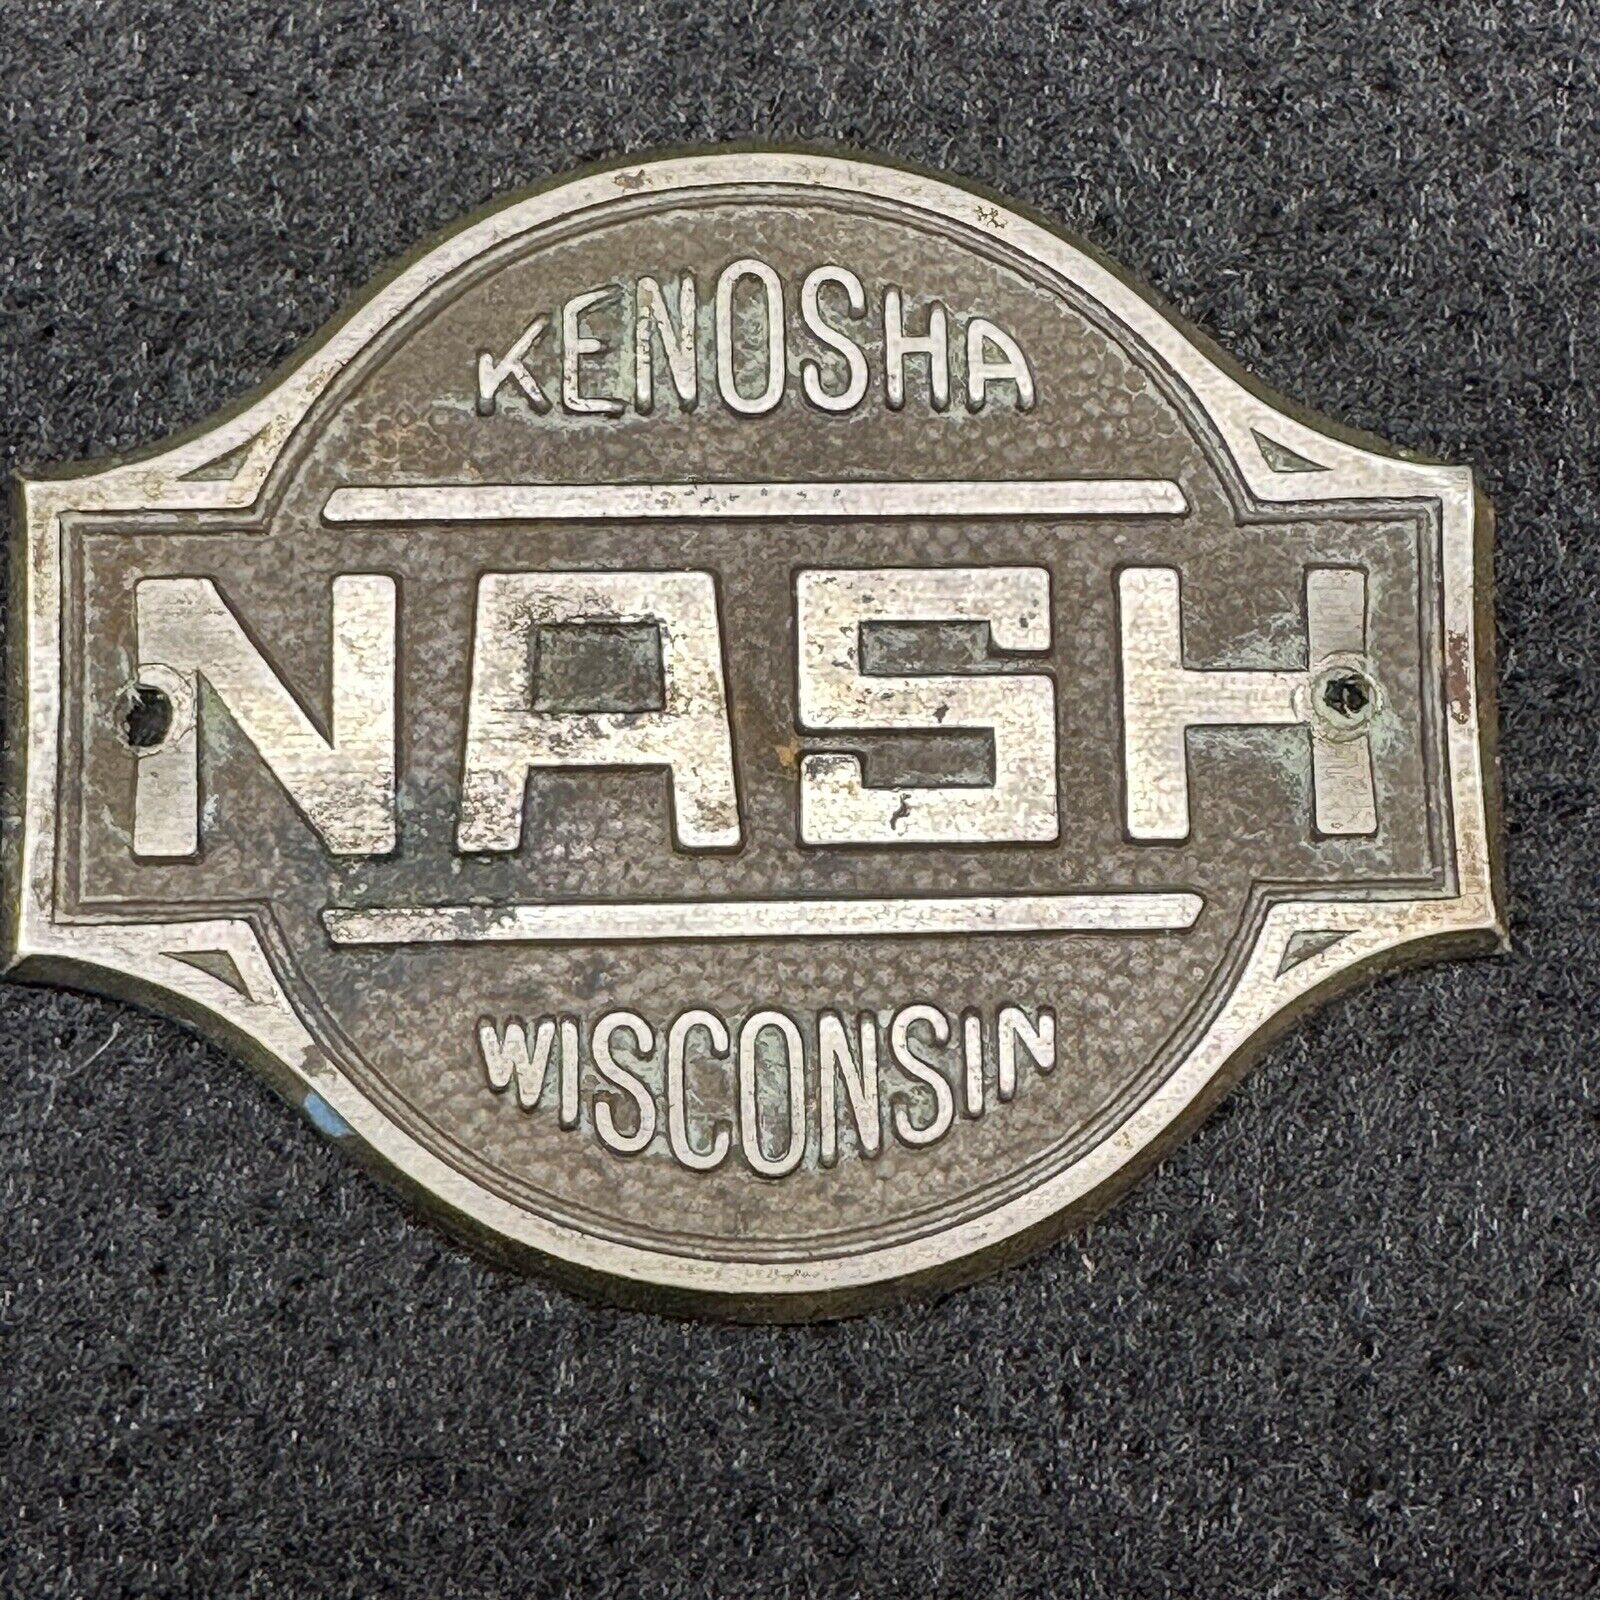 RARE NASH Kenosha Wisconsin Radiator Badge Metal Vintage Trim Sign Emblem Auto